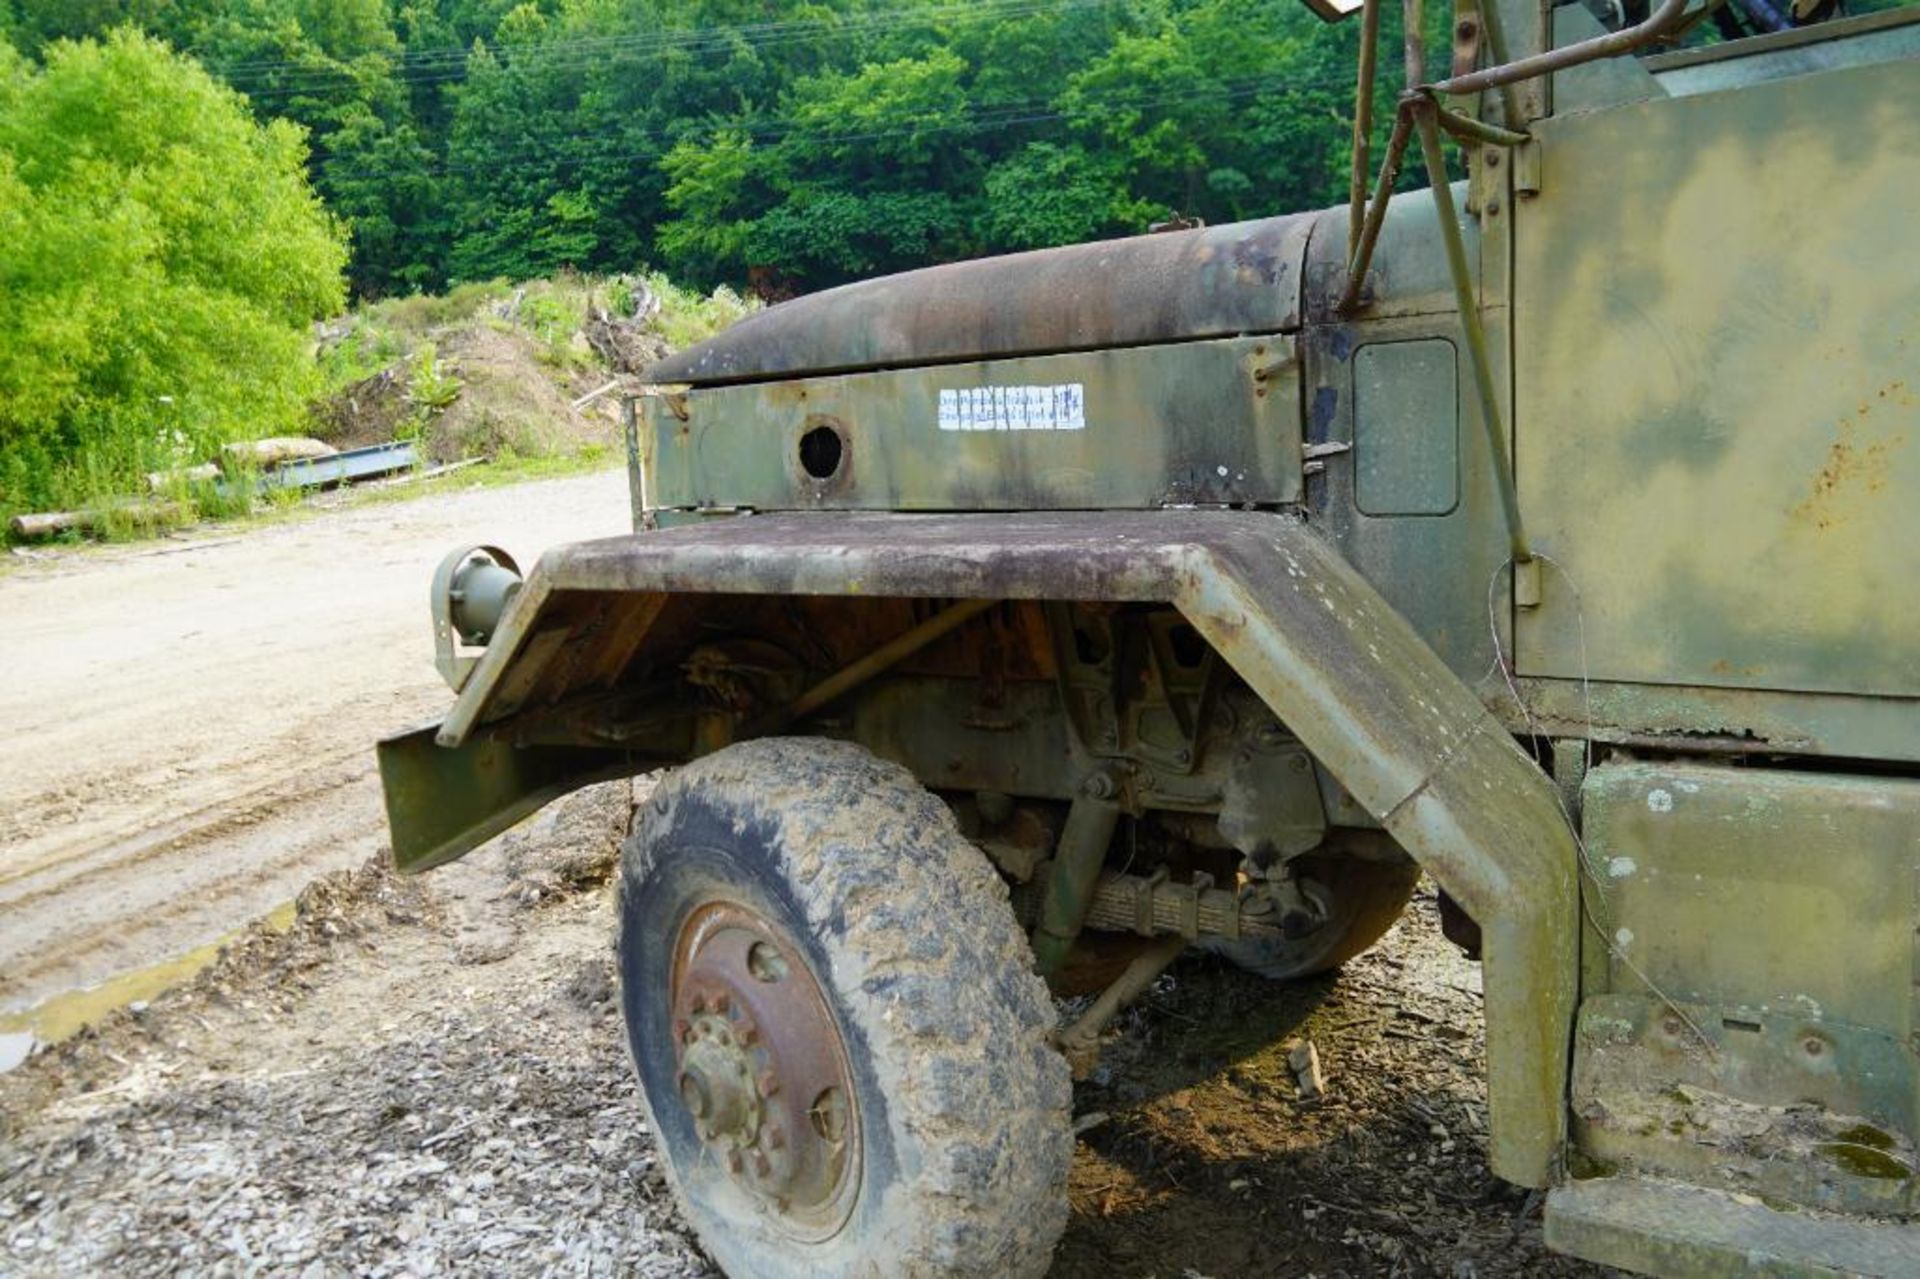 Military 6 x 6 Dump Truck - Image 27 of 50